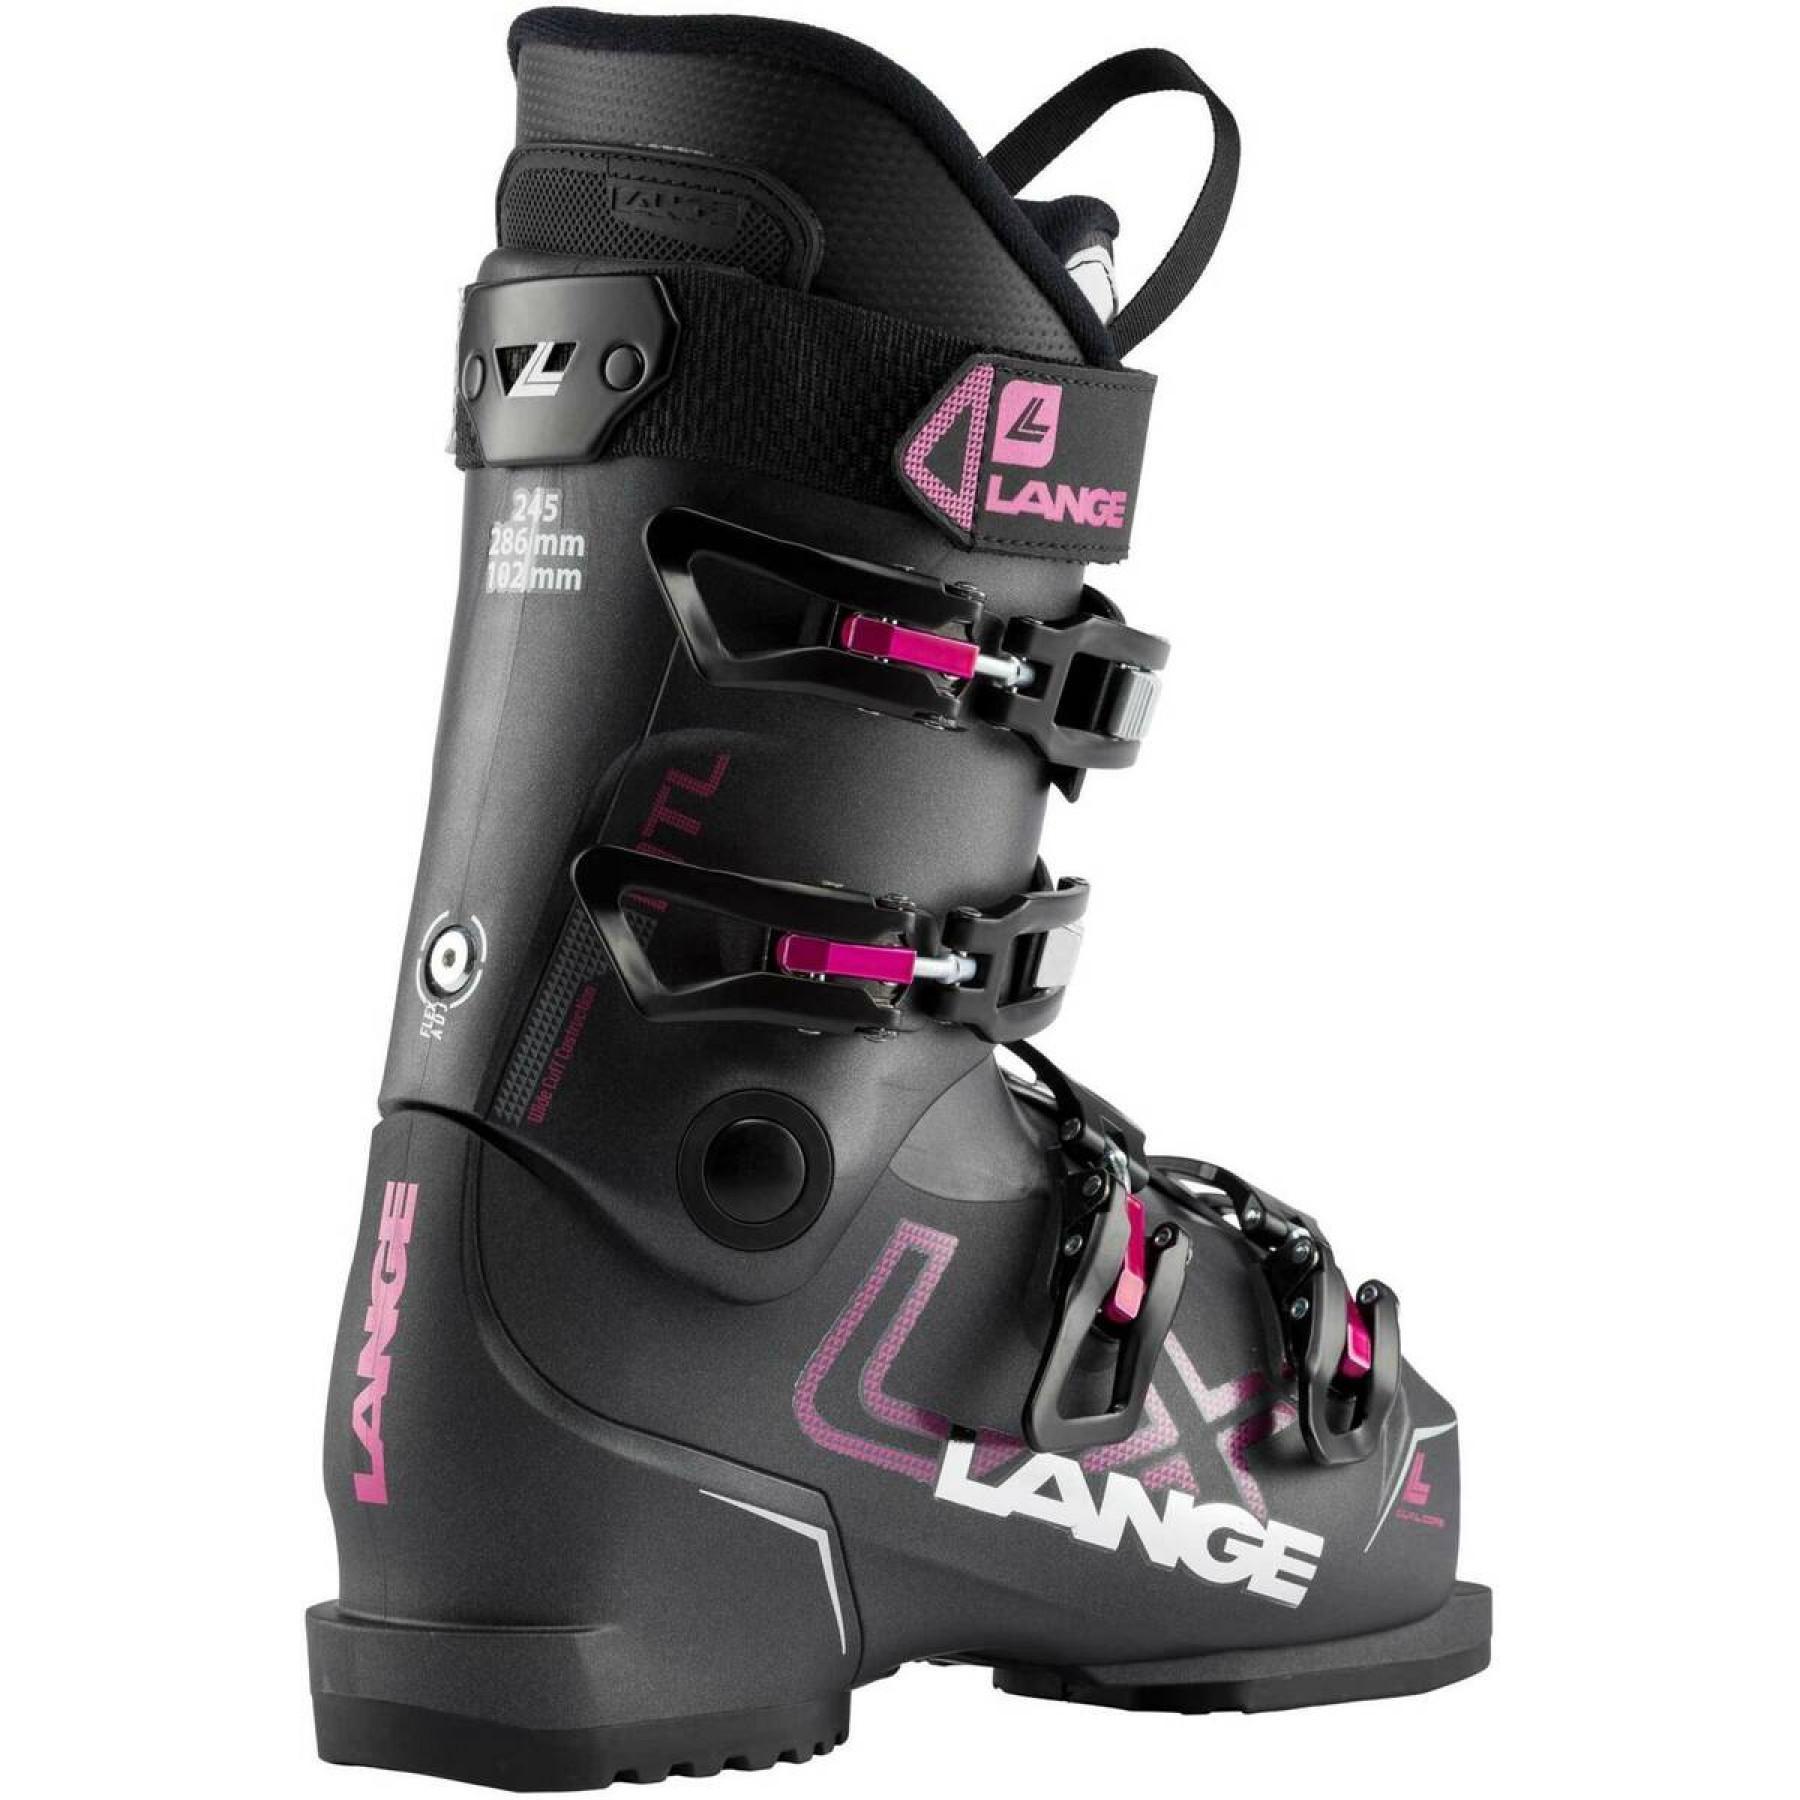 Women's ski boots Lange lx rtl